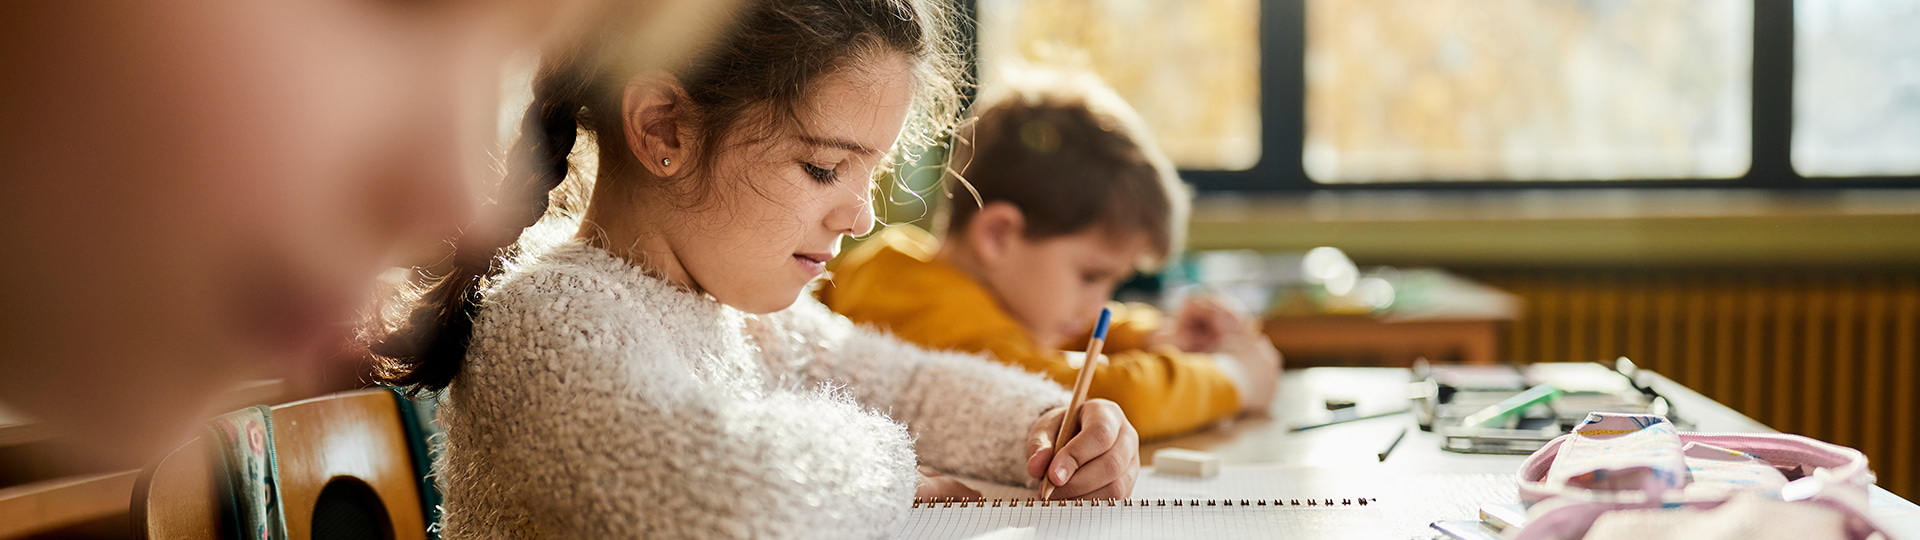 Children work on a writing assignment